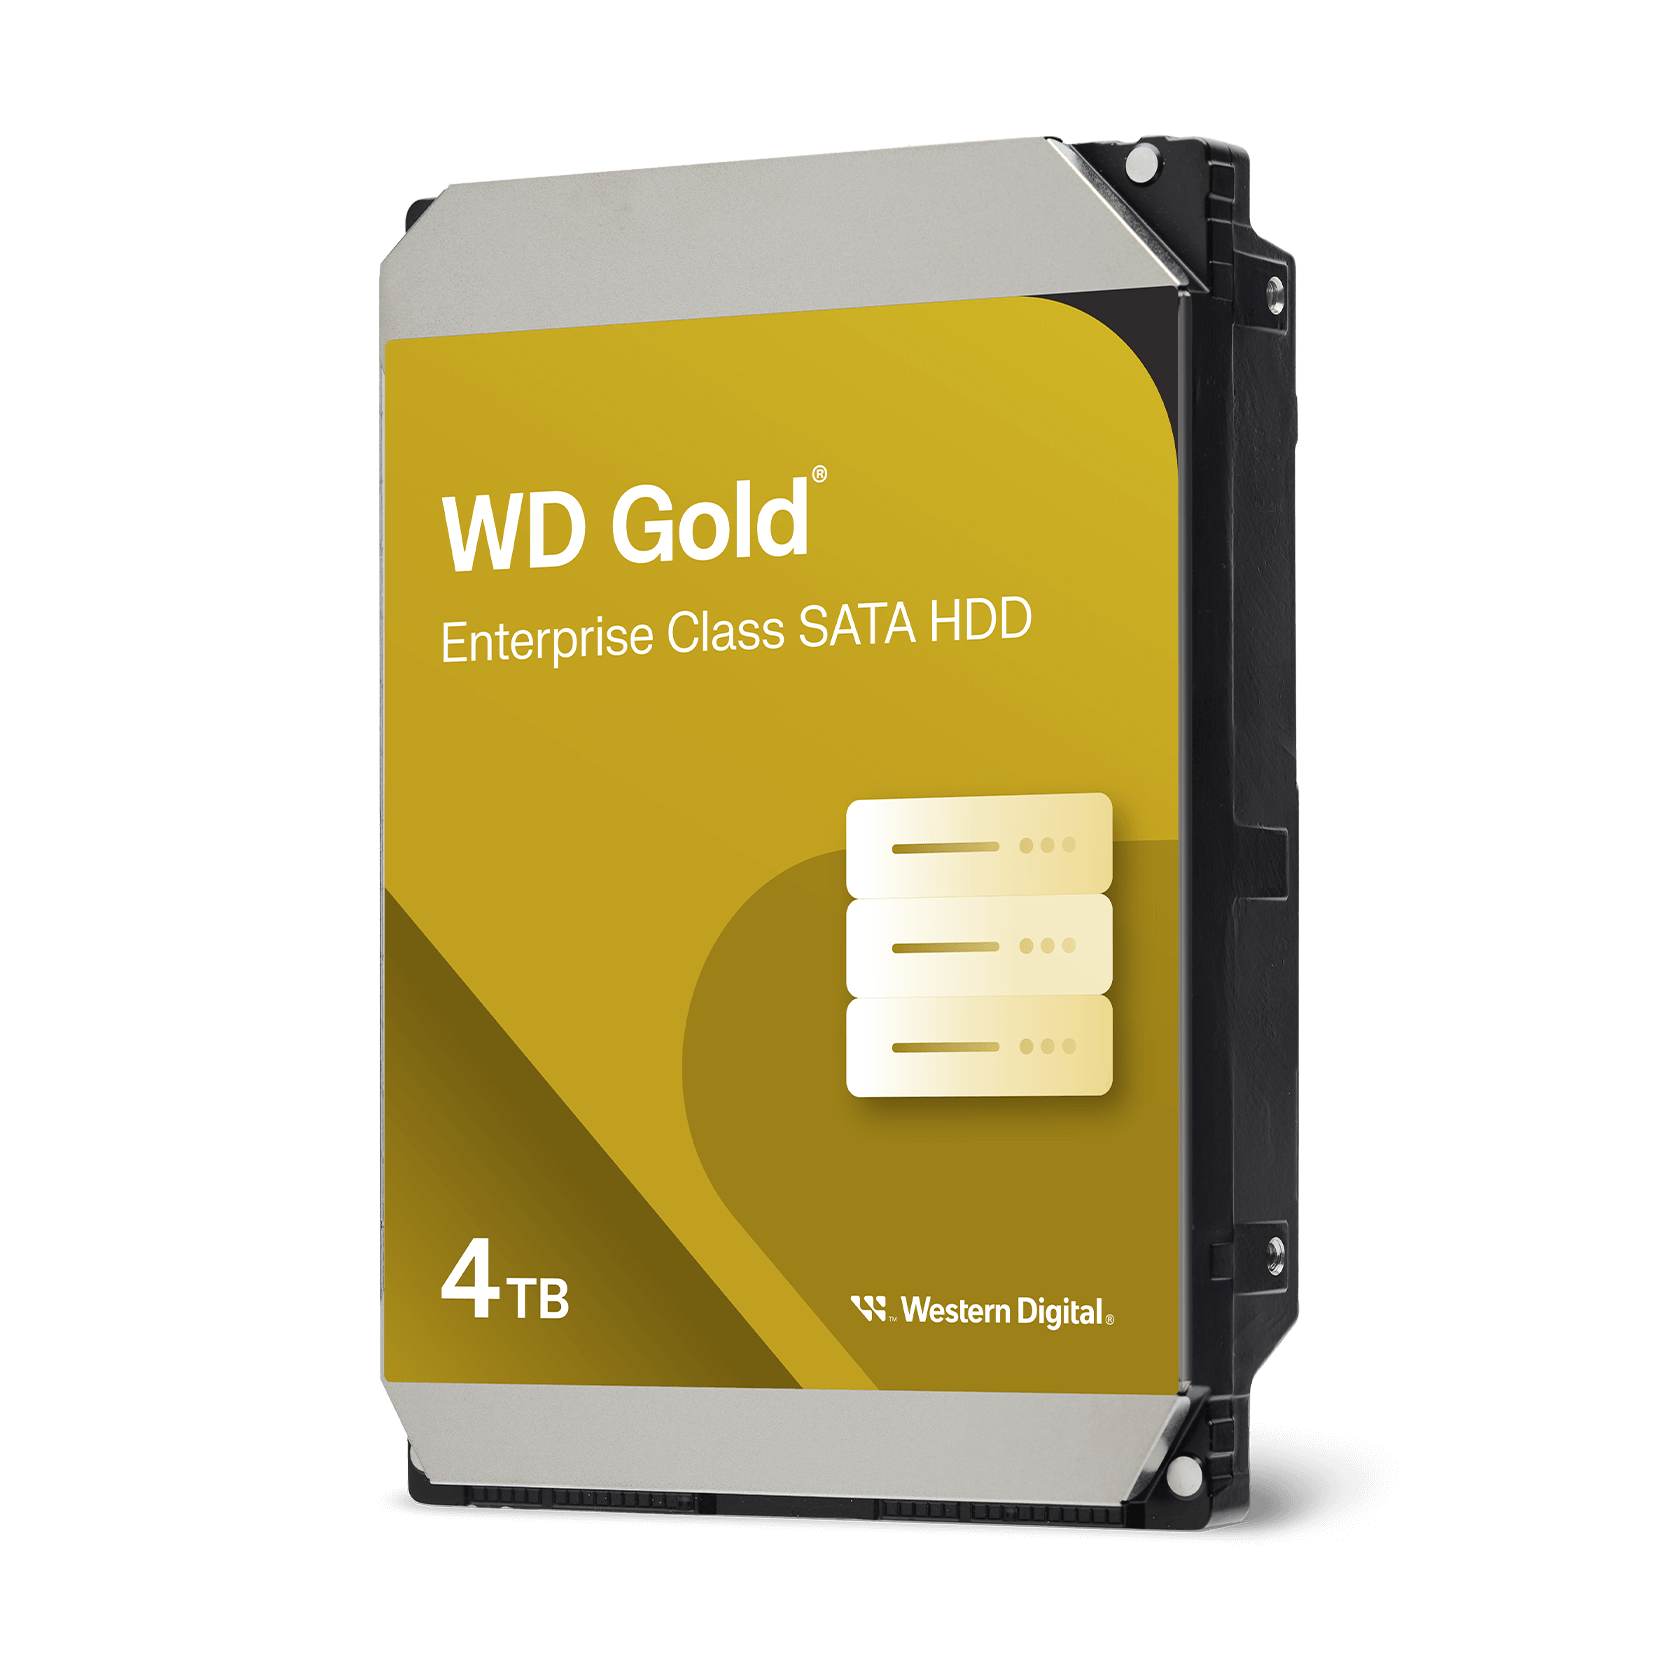 Western Digital 4TB WD Gold™ Enterprise Class SATA HDD - Internal Hard Drive - WD4004FRYZ